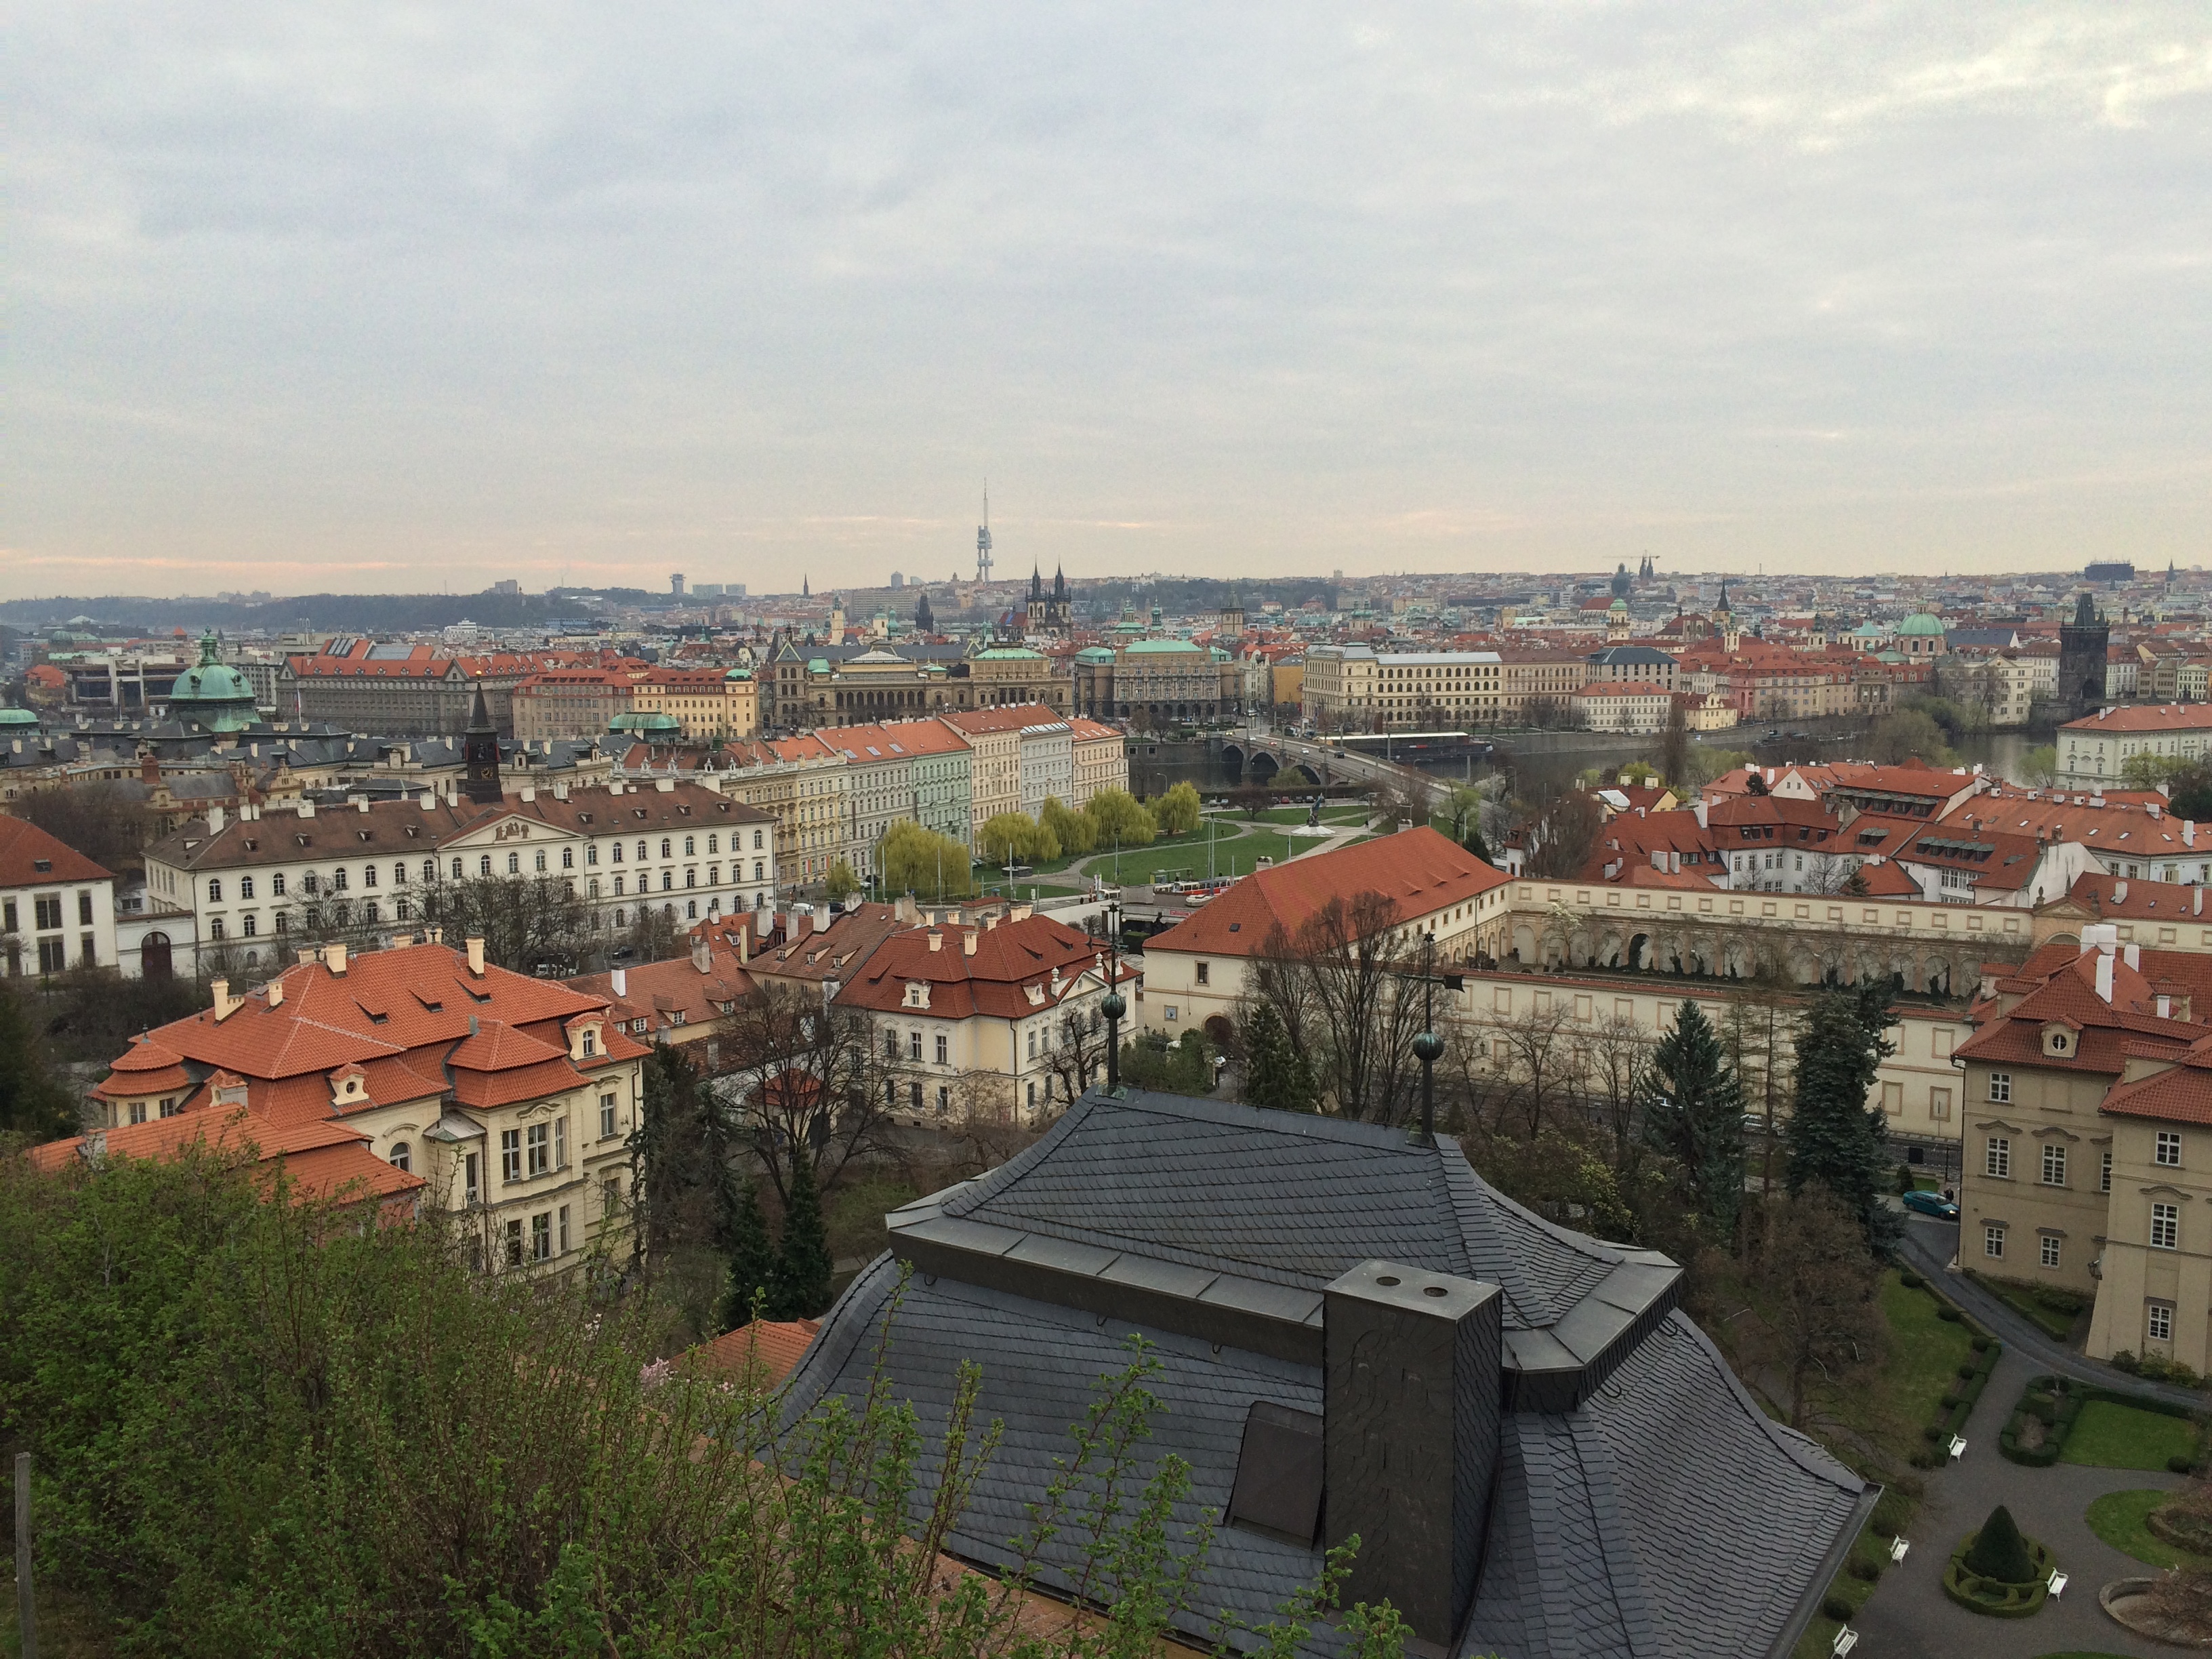 Eastern Prague, as seen from the hills around Prague Castle